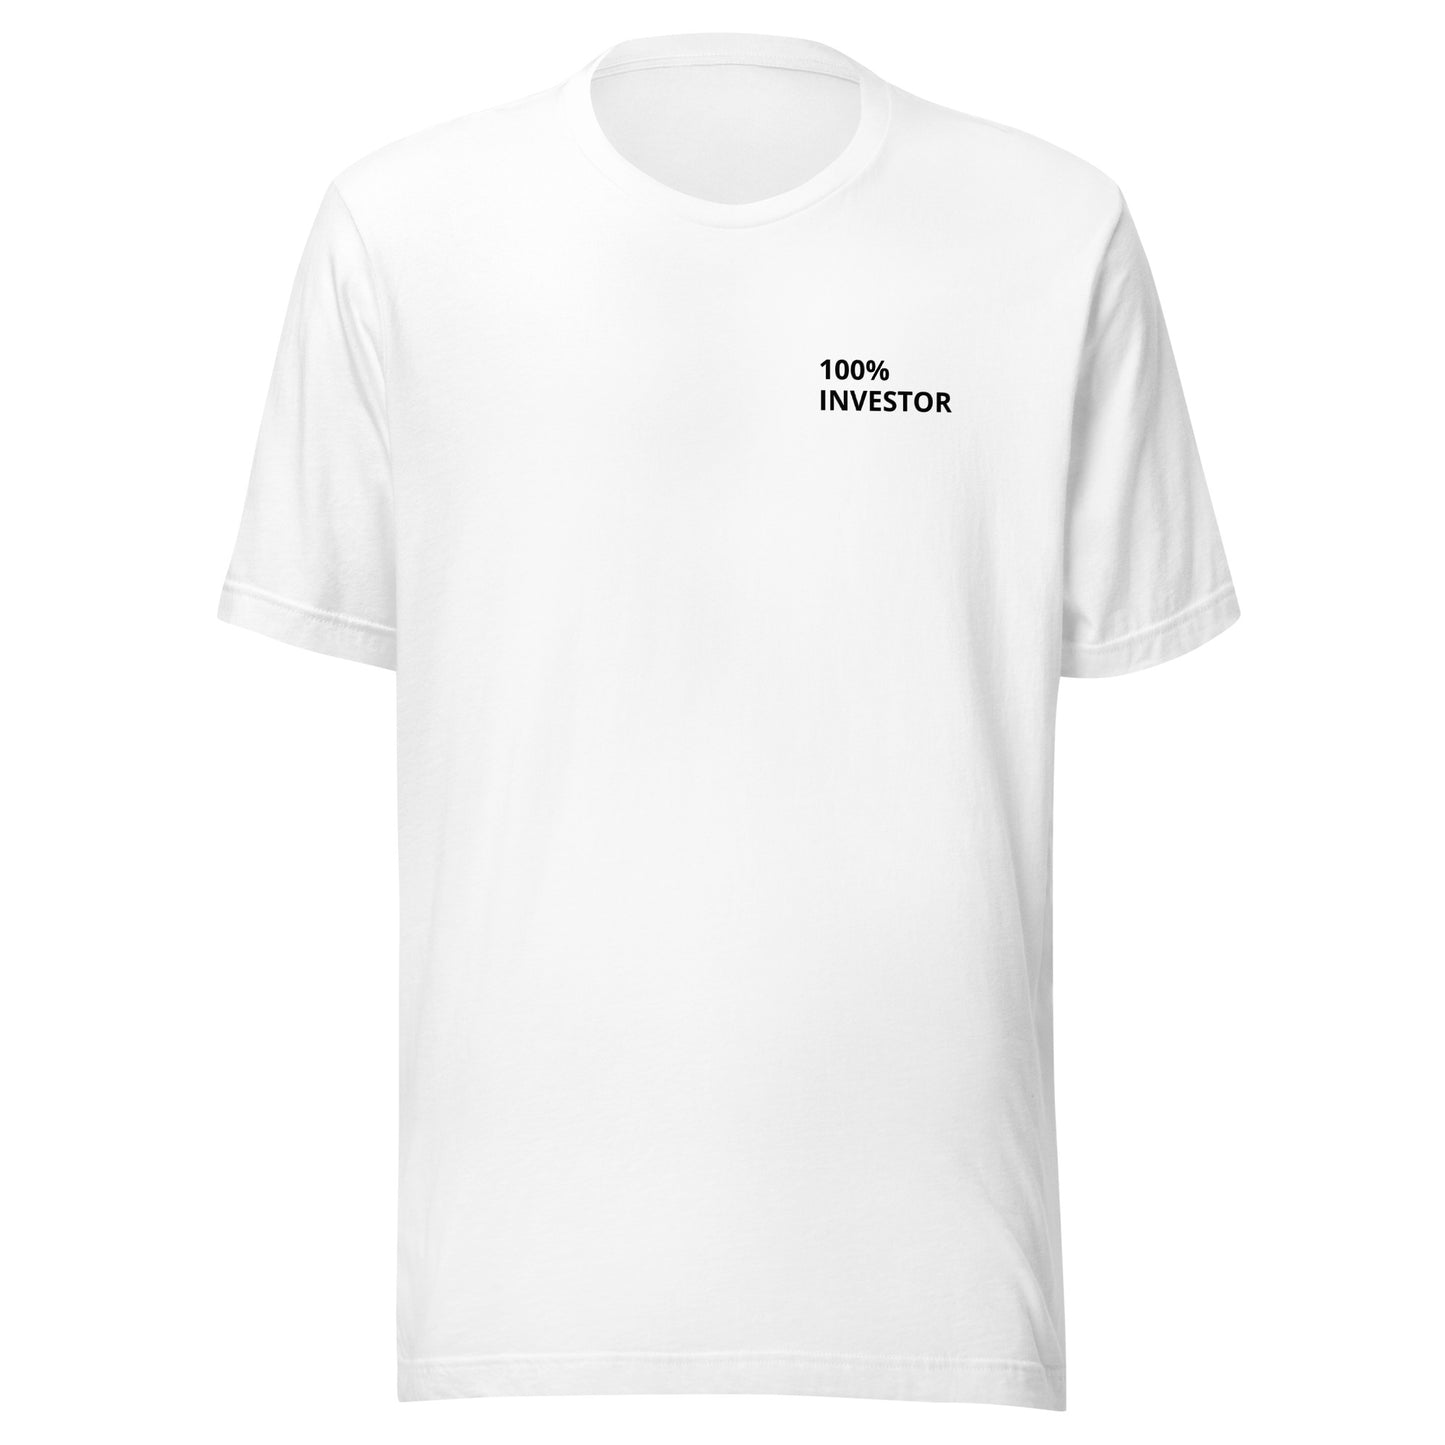 100% INVESTOR Unisex T-Shirt